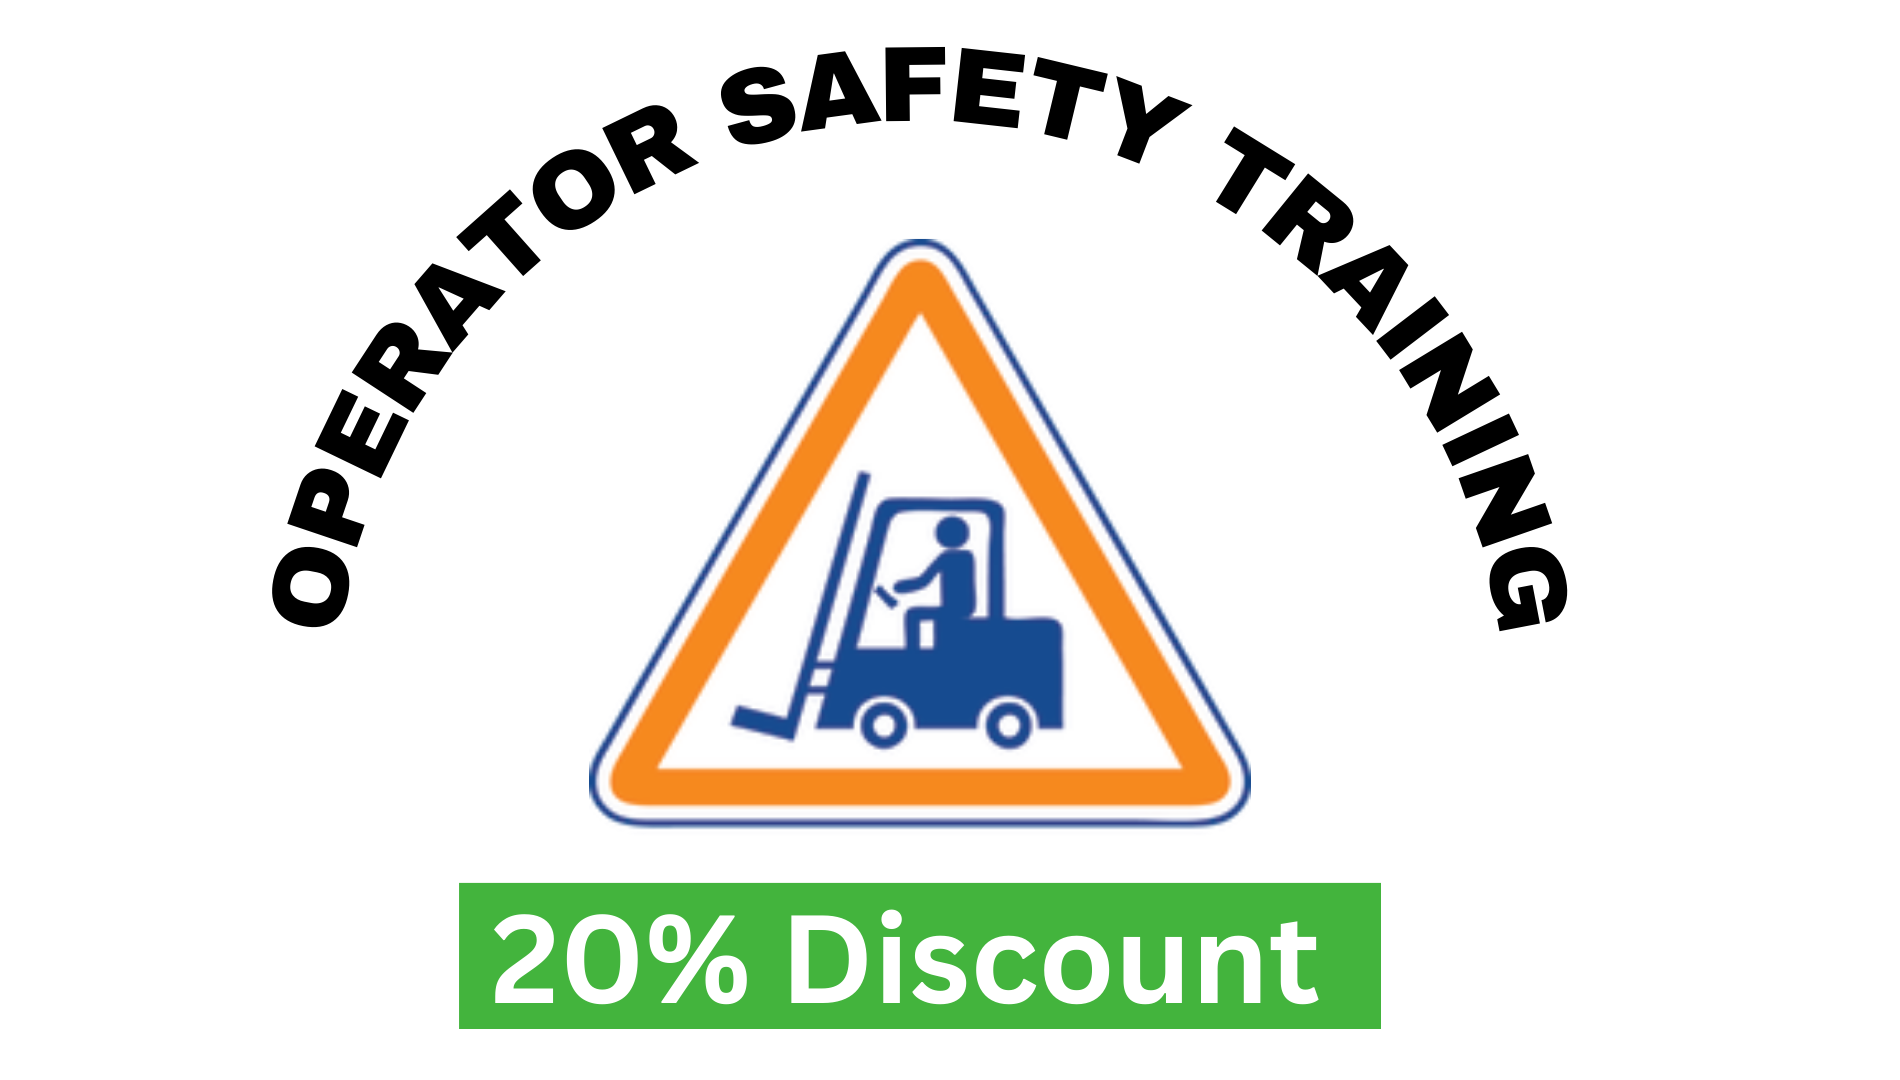 Blog post - 20% OFF Operator Safety Training